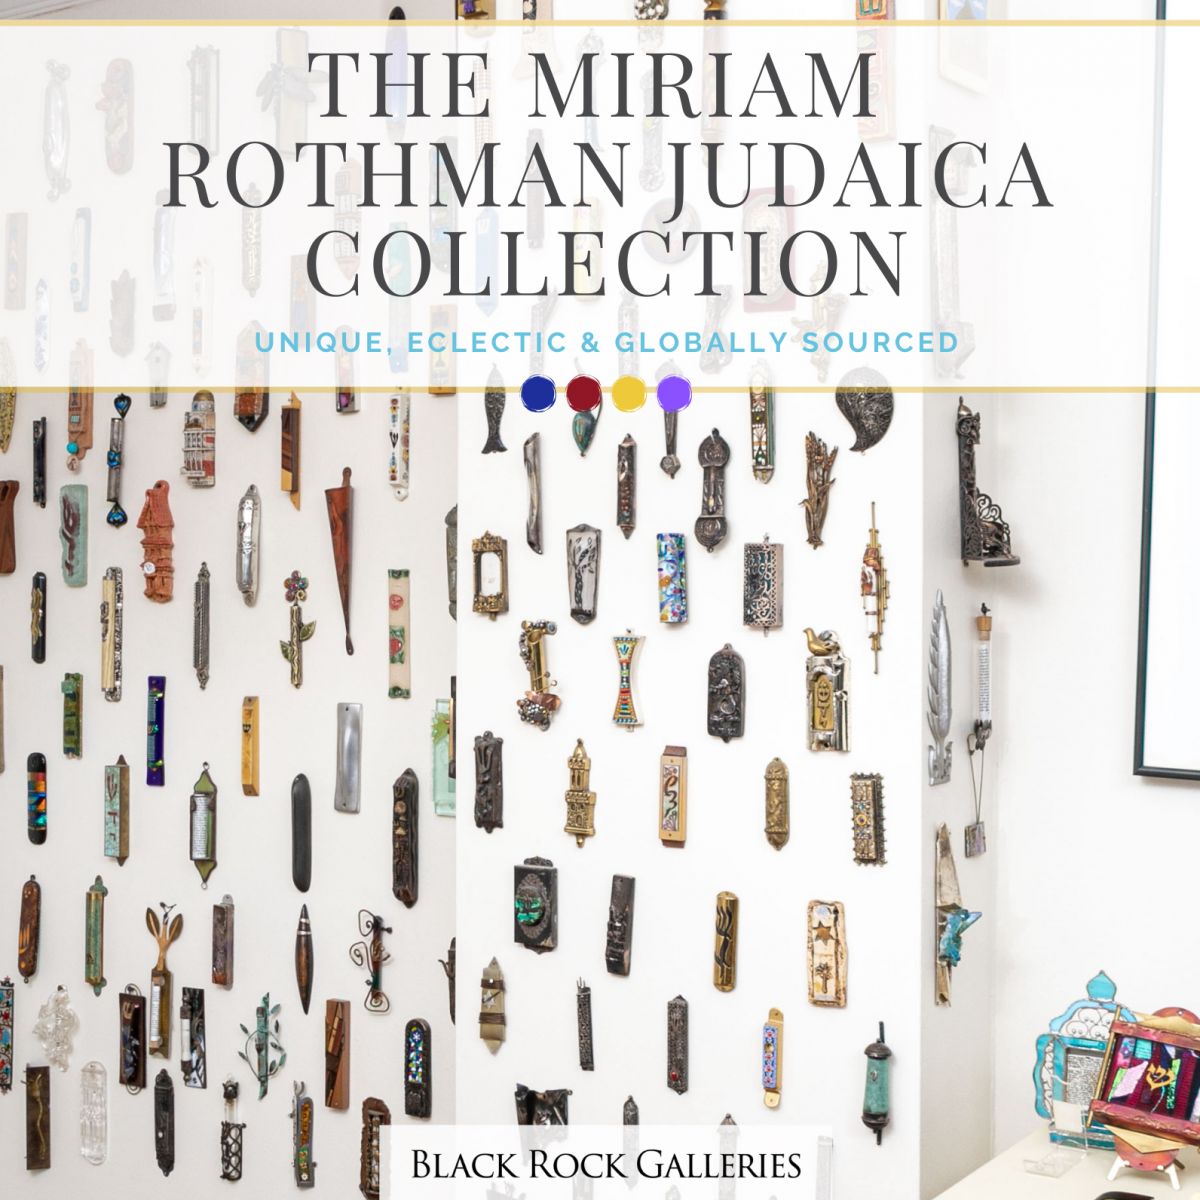 About the Miriam & Rabbi Robert Rothman Judaica collection